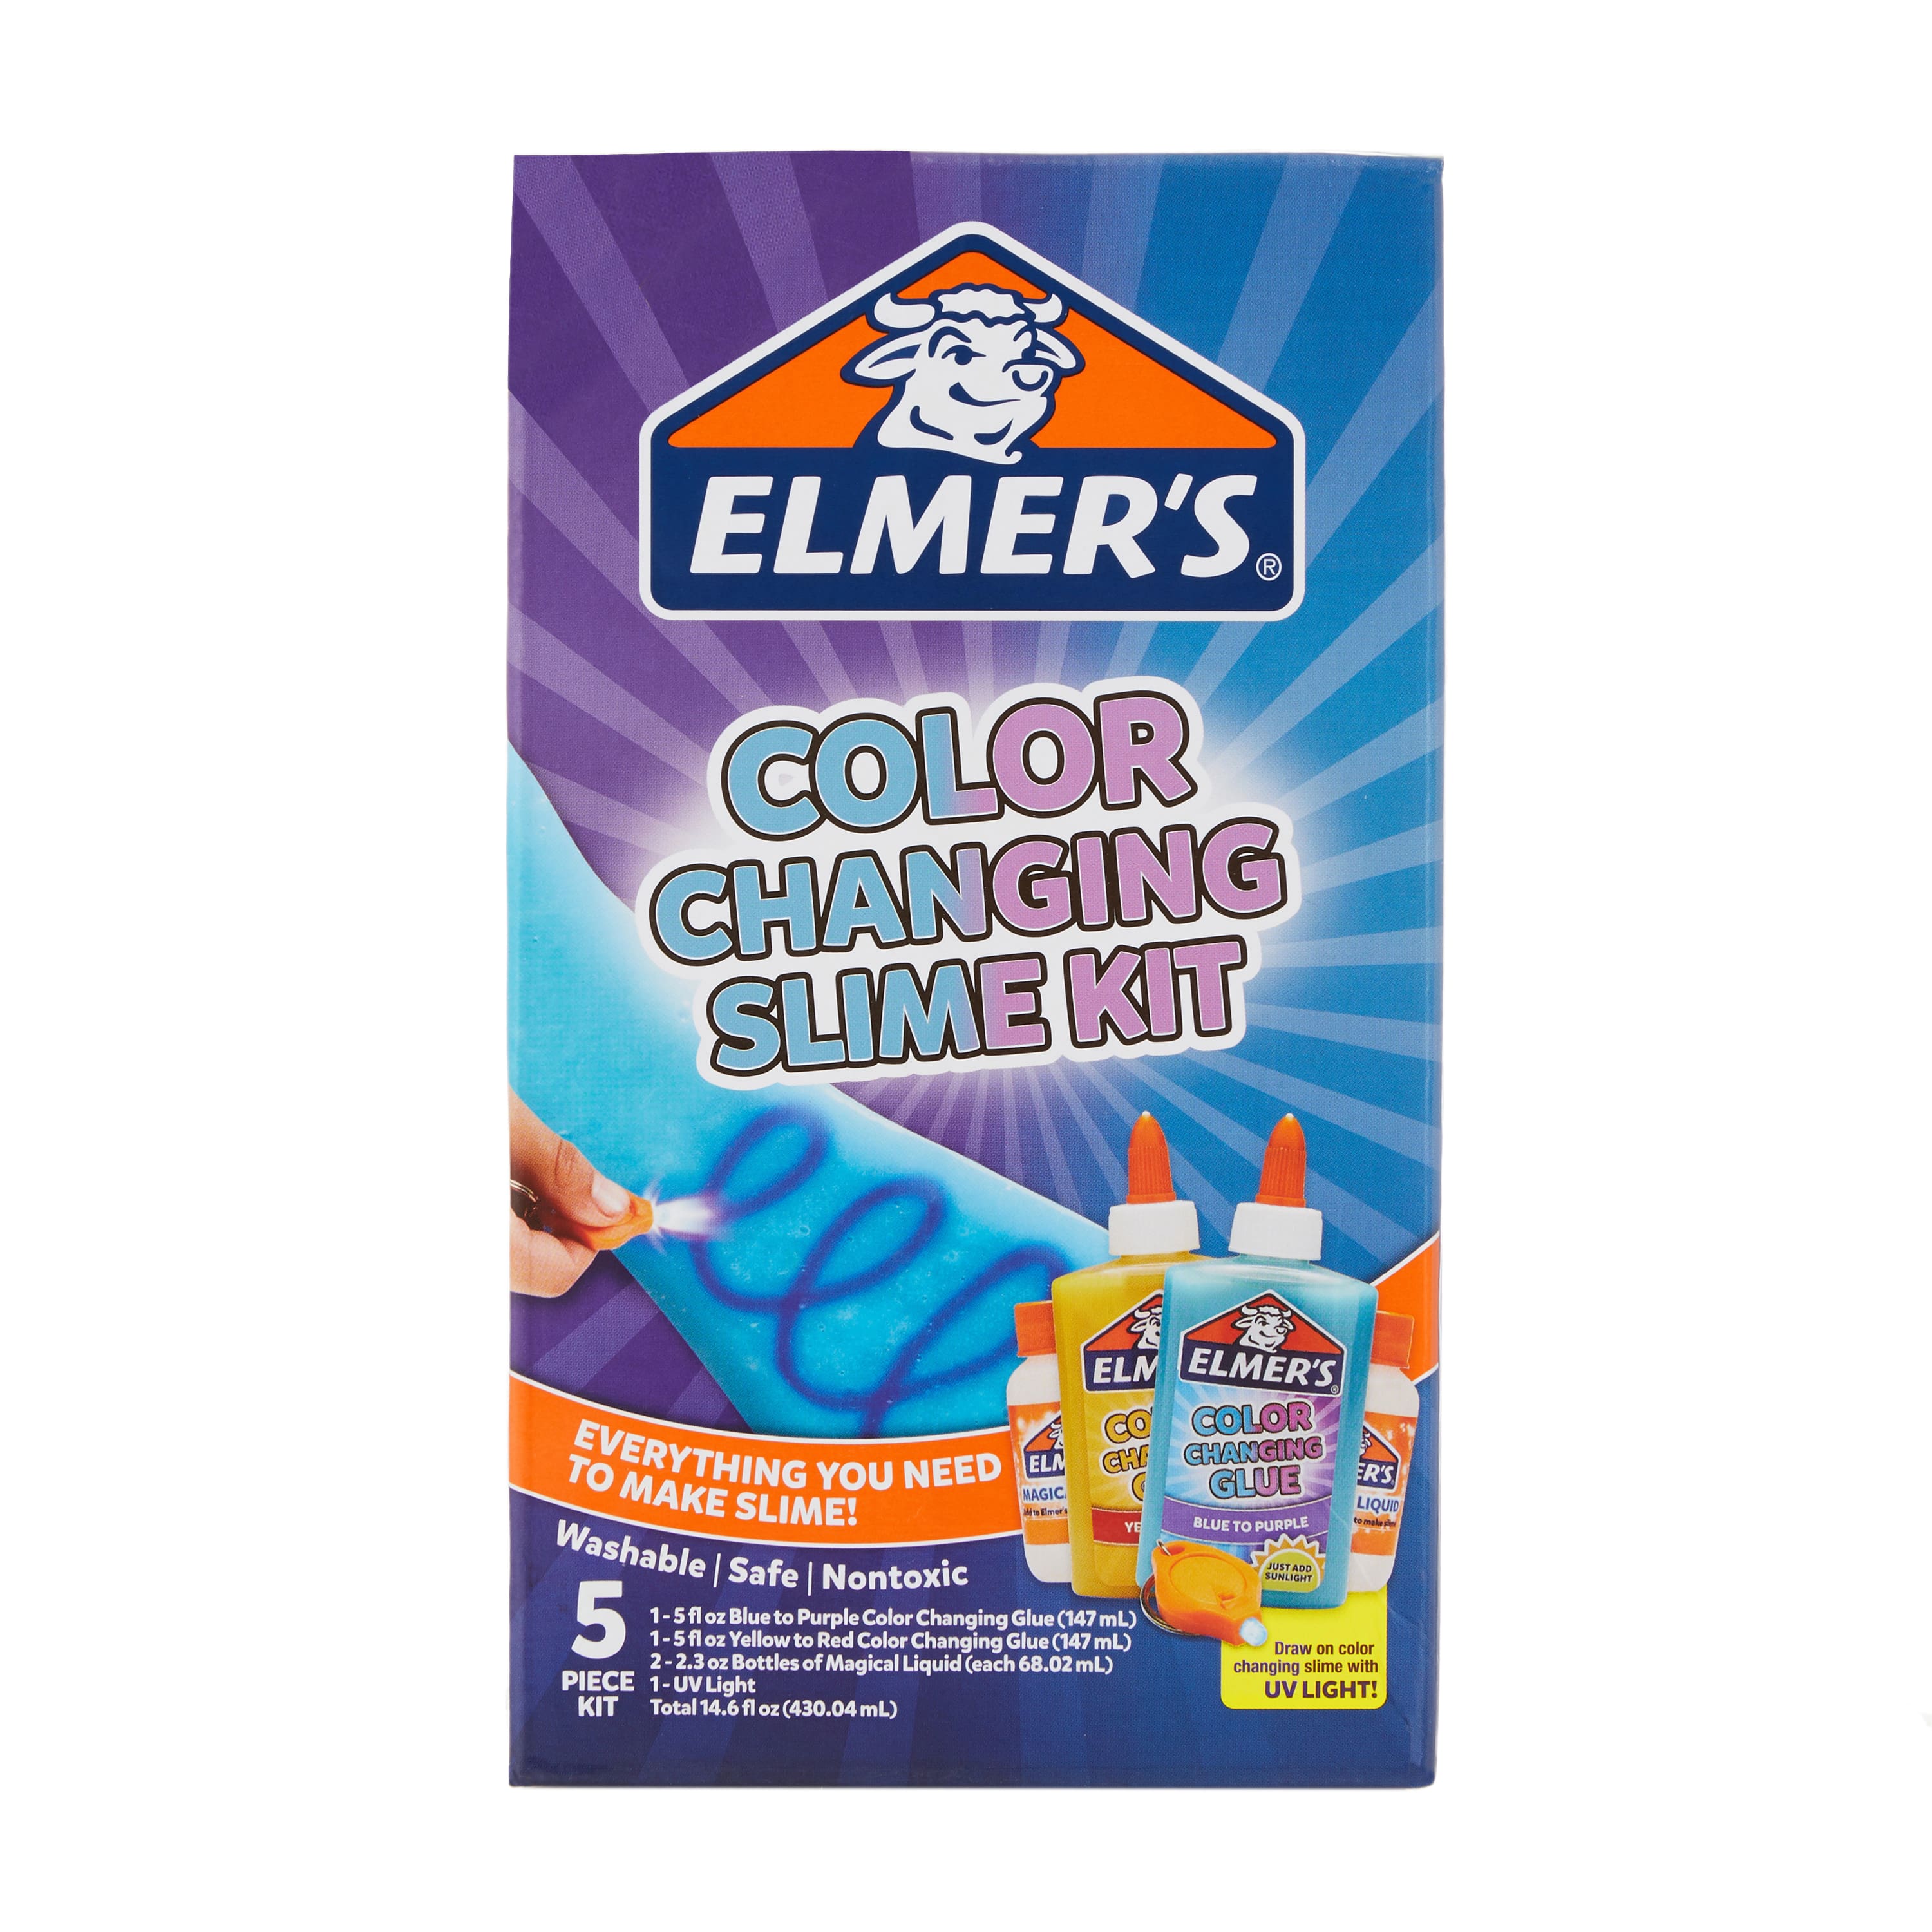 Elmer's Collection Slime Kit